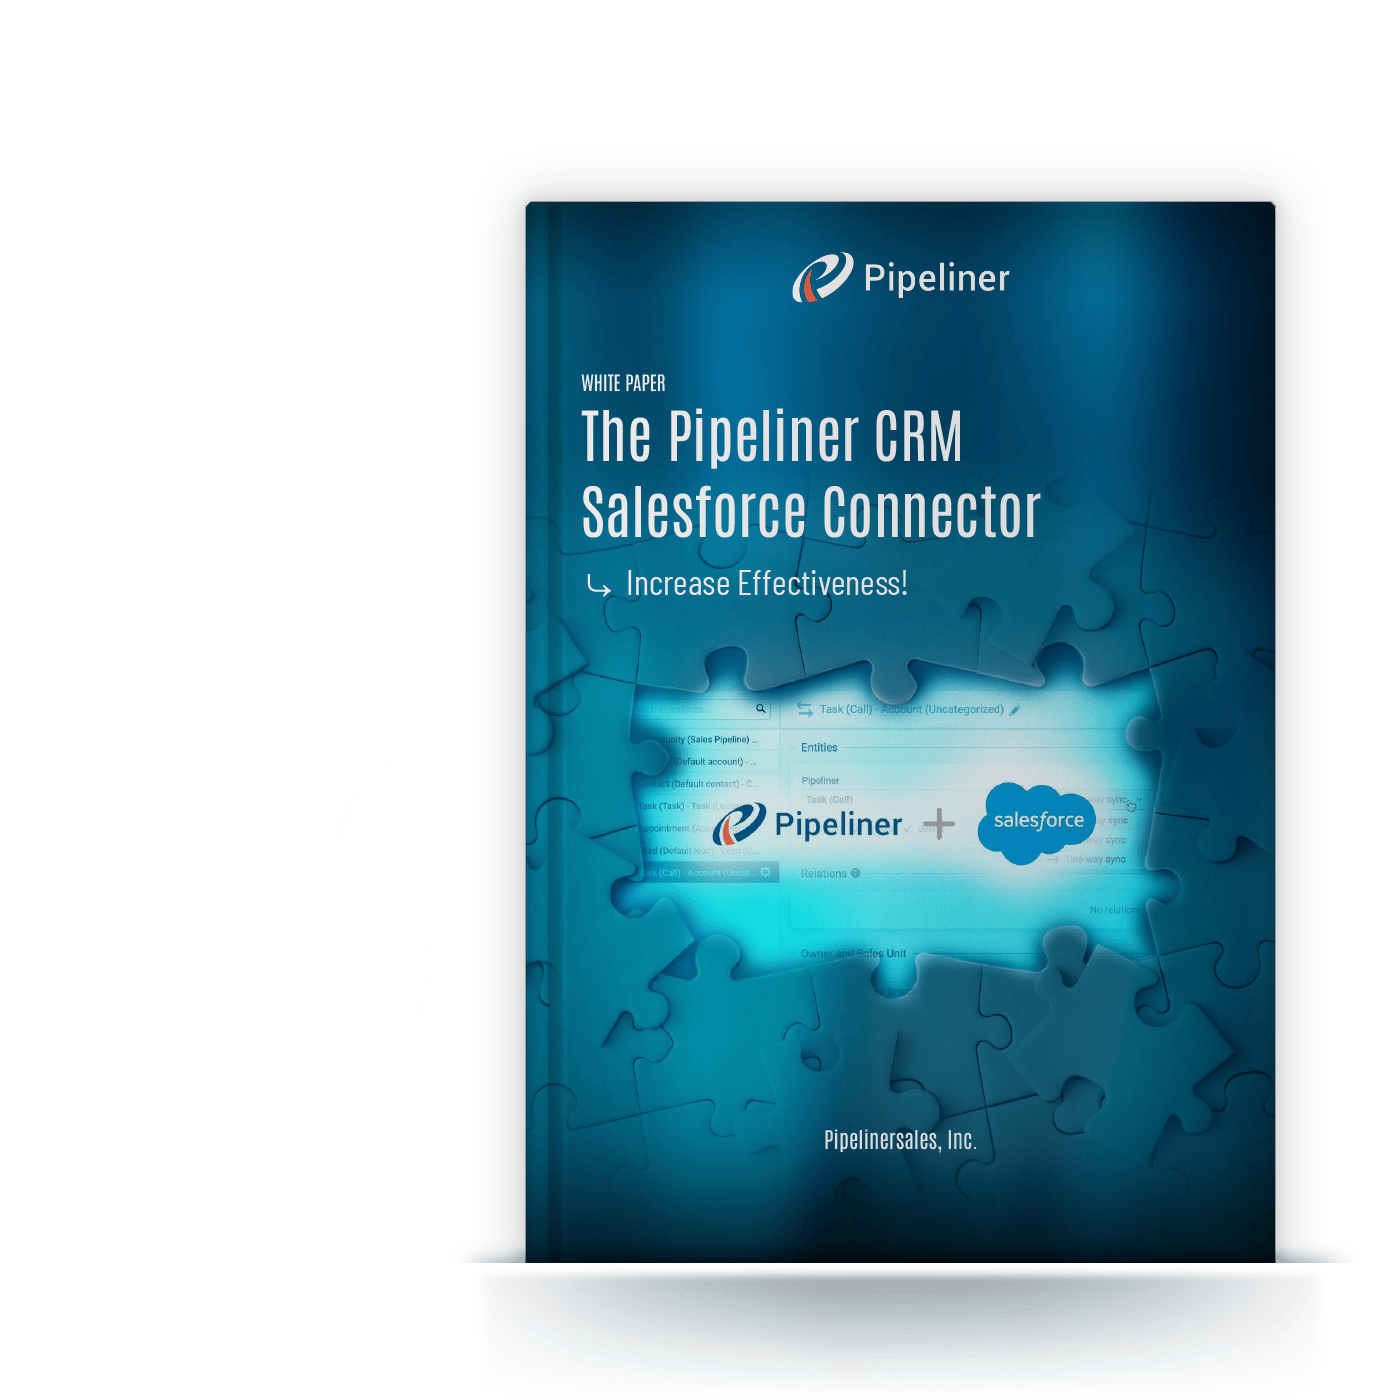 Pipeliner CRM Salesforce Connector whitepaper